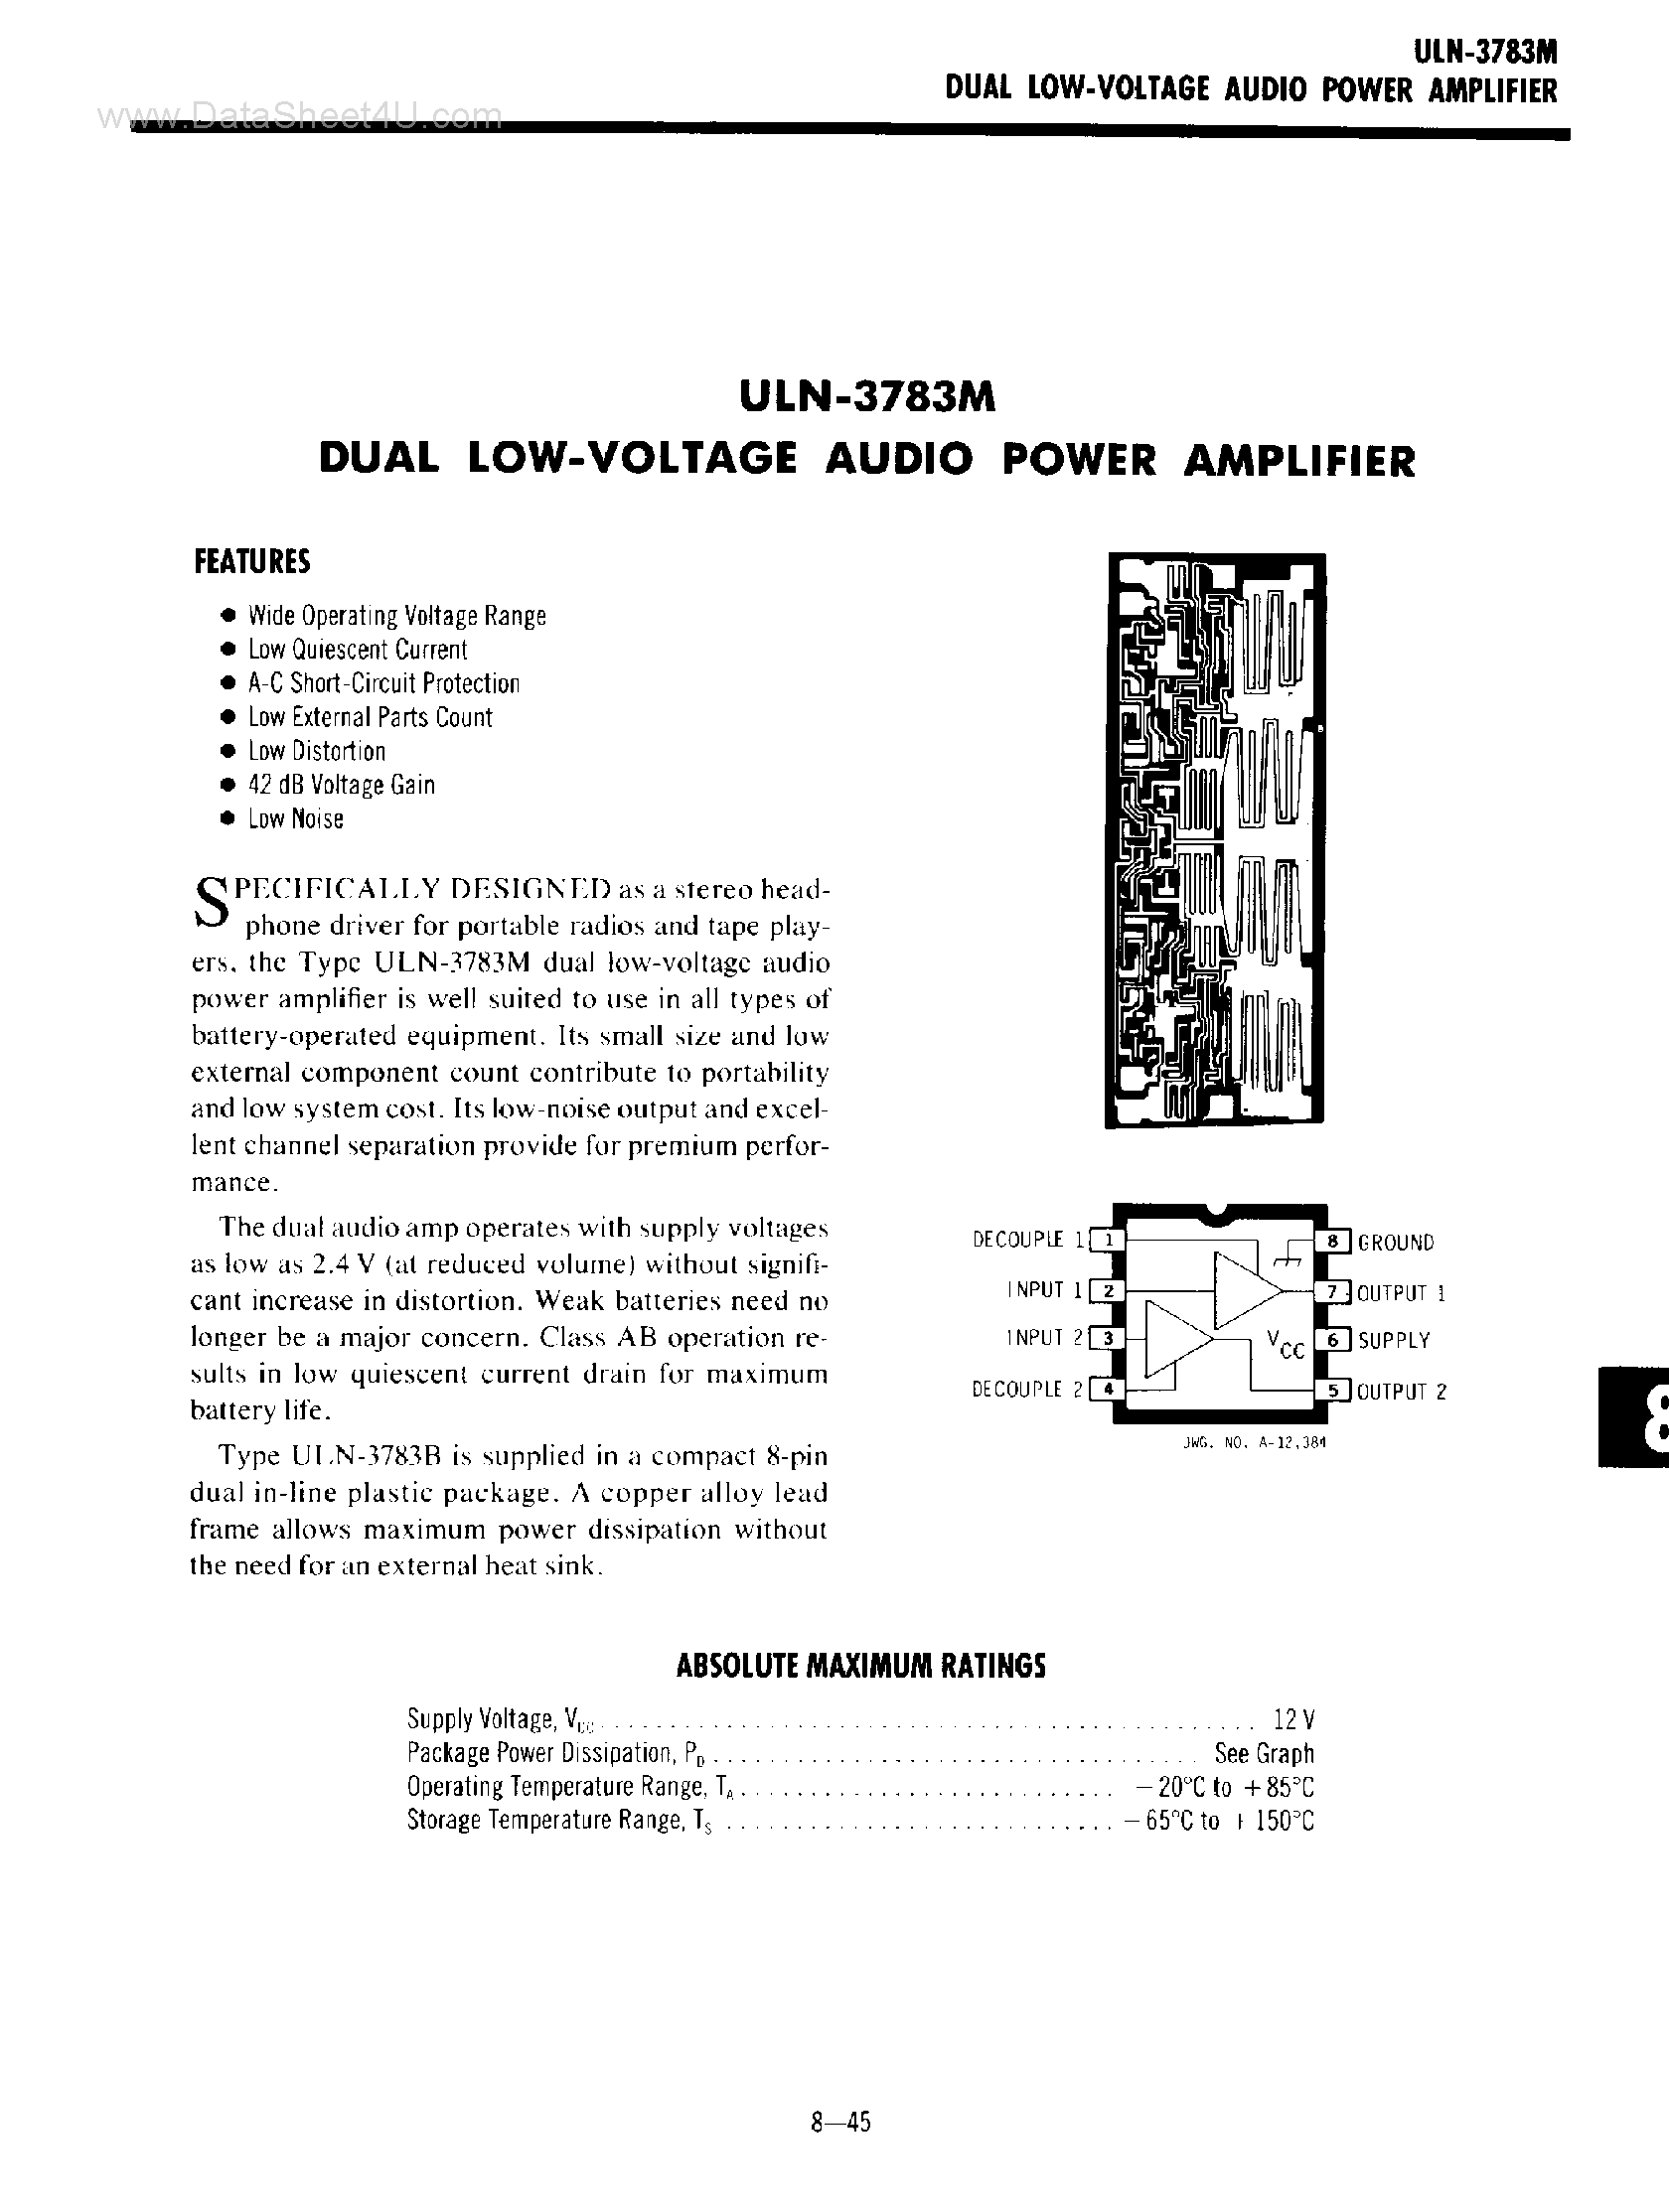 Даташит ULN-3783M - Dual Low Voltage Audio Power Amplifier страница 1